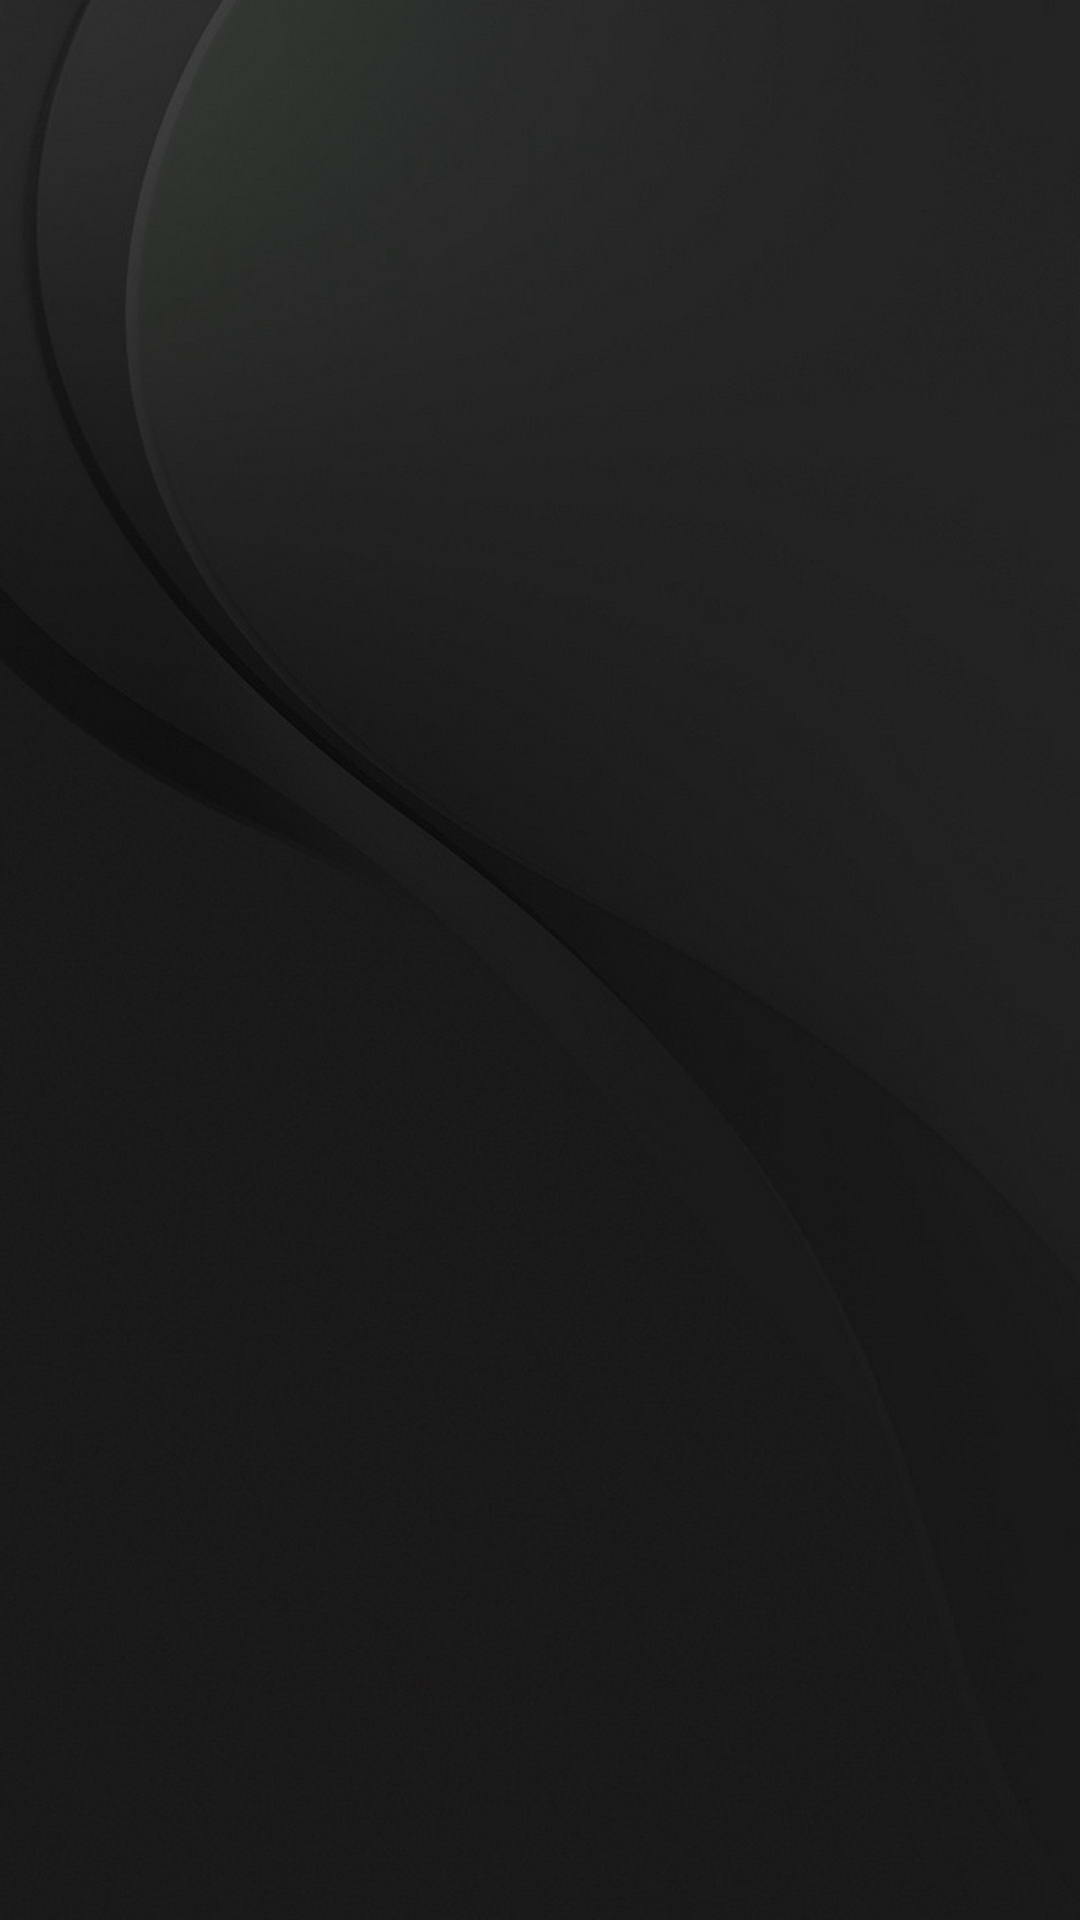 1080x1920 Black Athmo Nexus 5 Wallpaper, Nexus 5 Wallpaper, Nexus 5 Wallpapers .